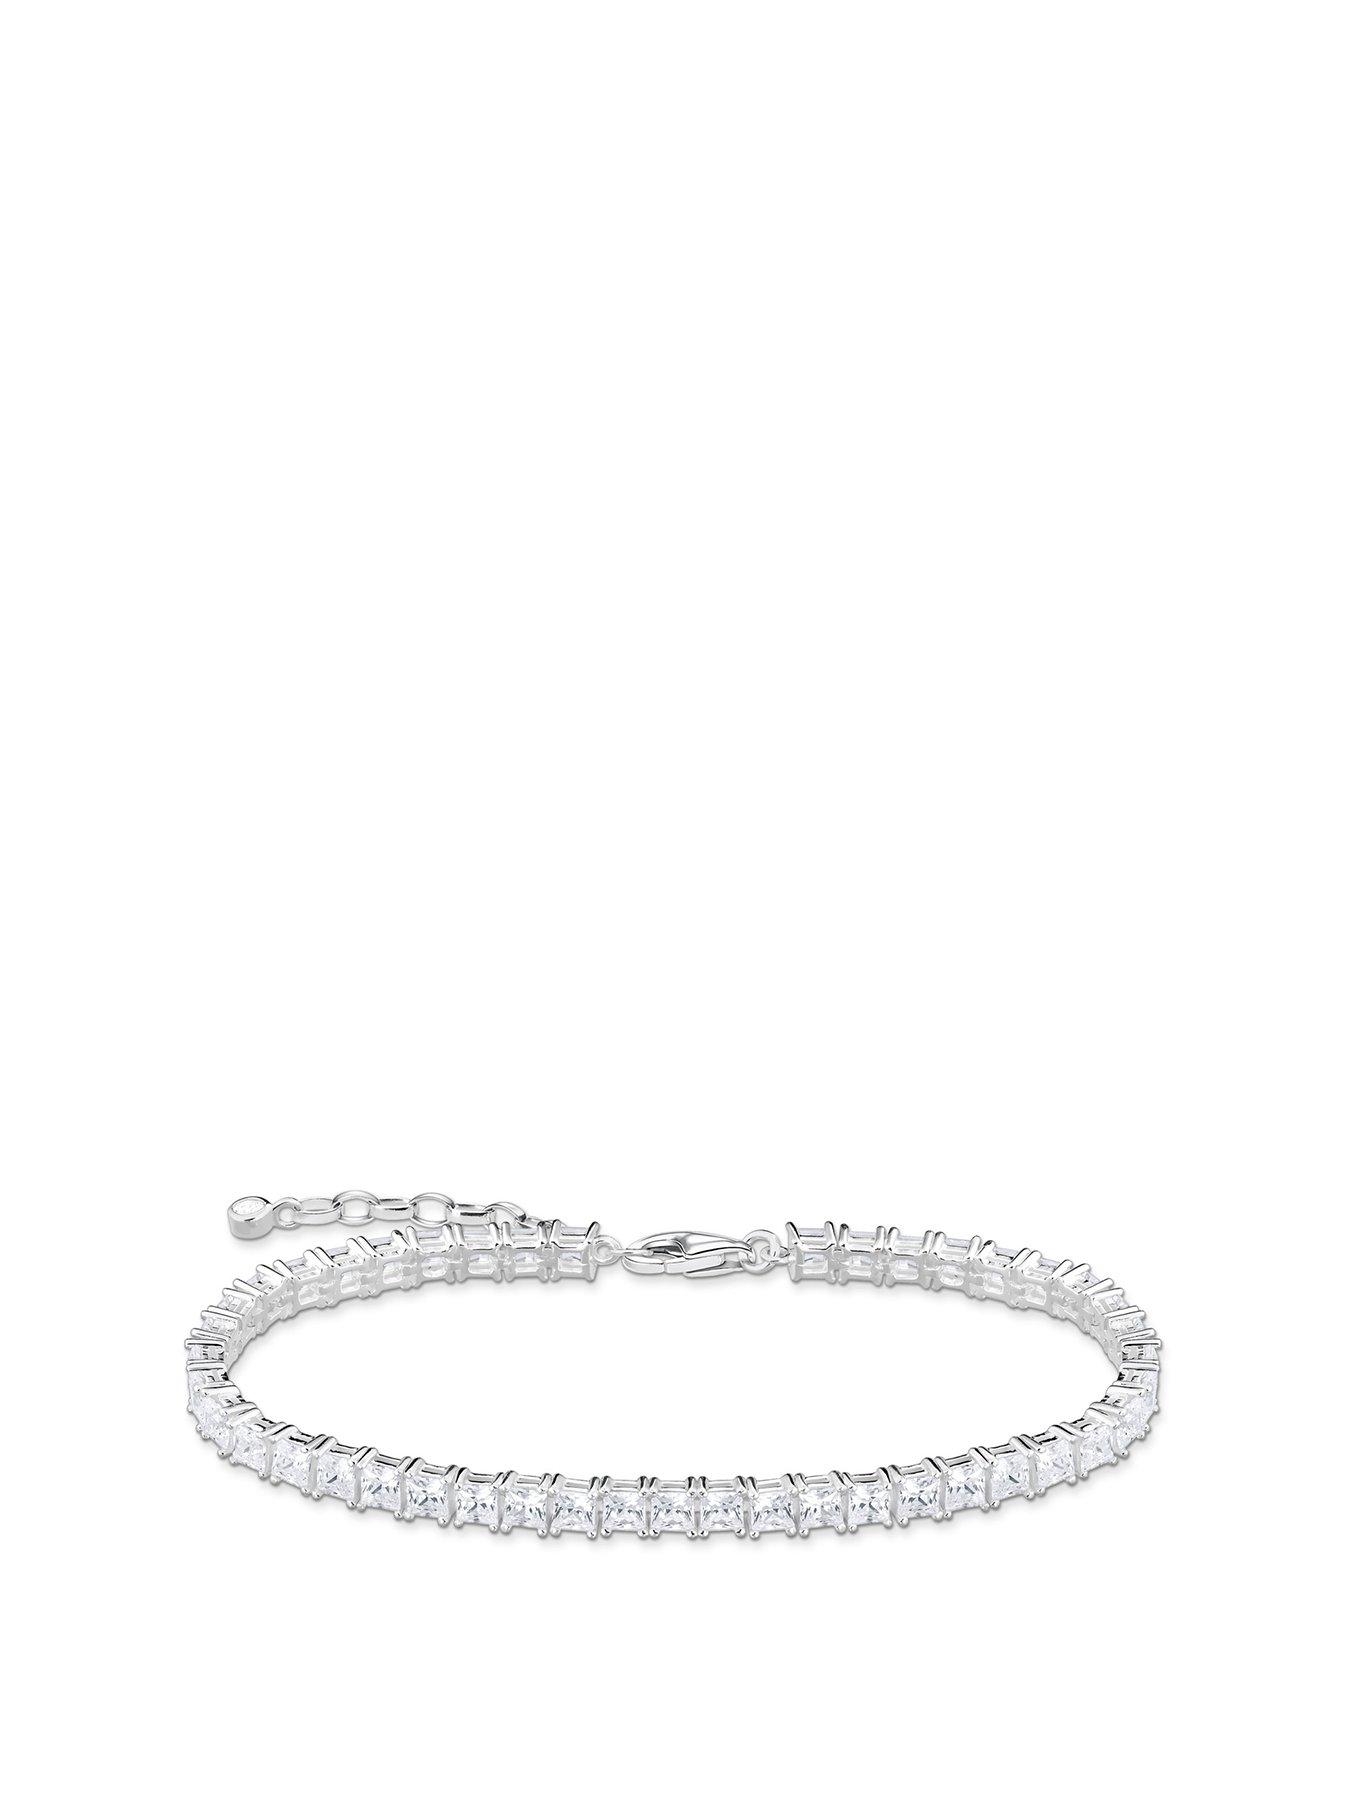 Thomas Sabo Bracelet silver-colored elegant Jewelry Arm Decorations Bracelets 